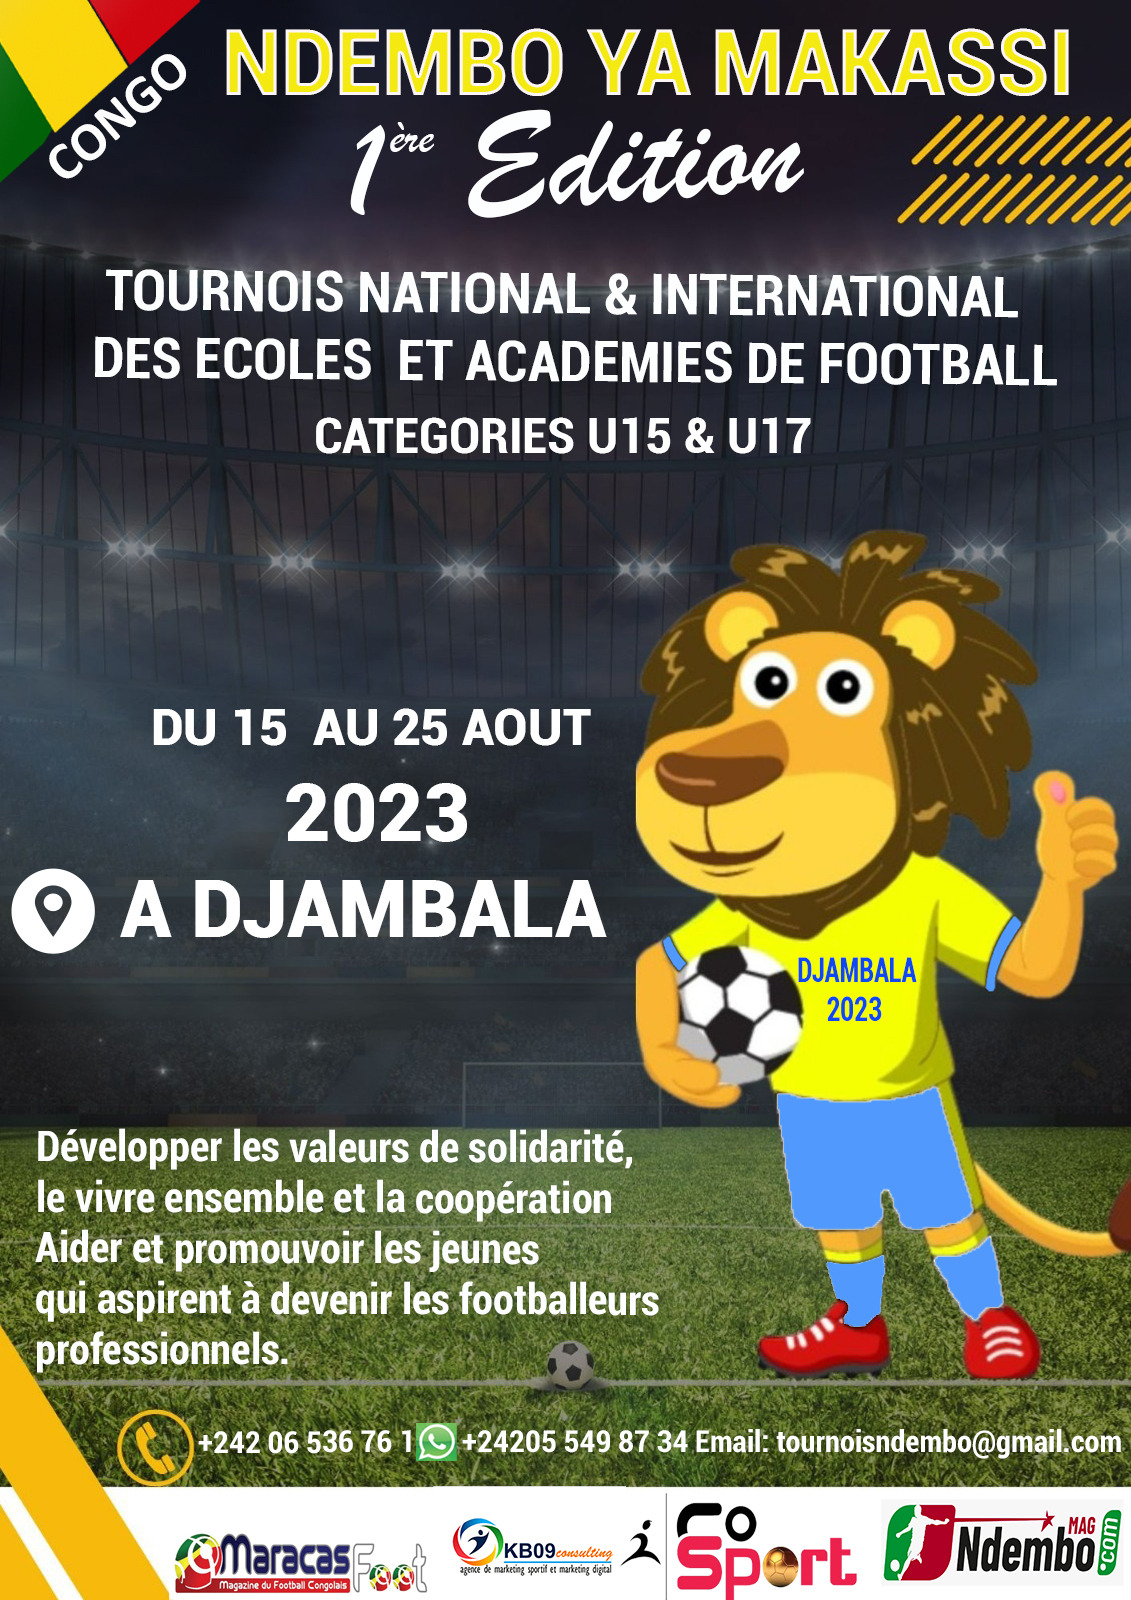 FOOTBALL AU CONGO : UN TOURNOI INTERNATIONAL INÉDIT À DJAMBALA DÉNOMMÉ « NDEMBO YA MAKASSI » 